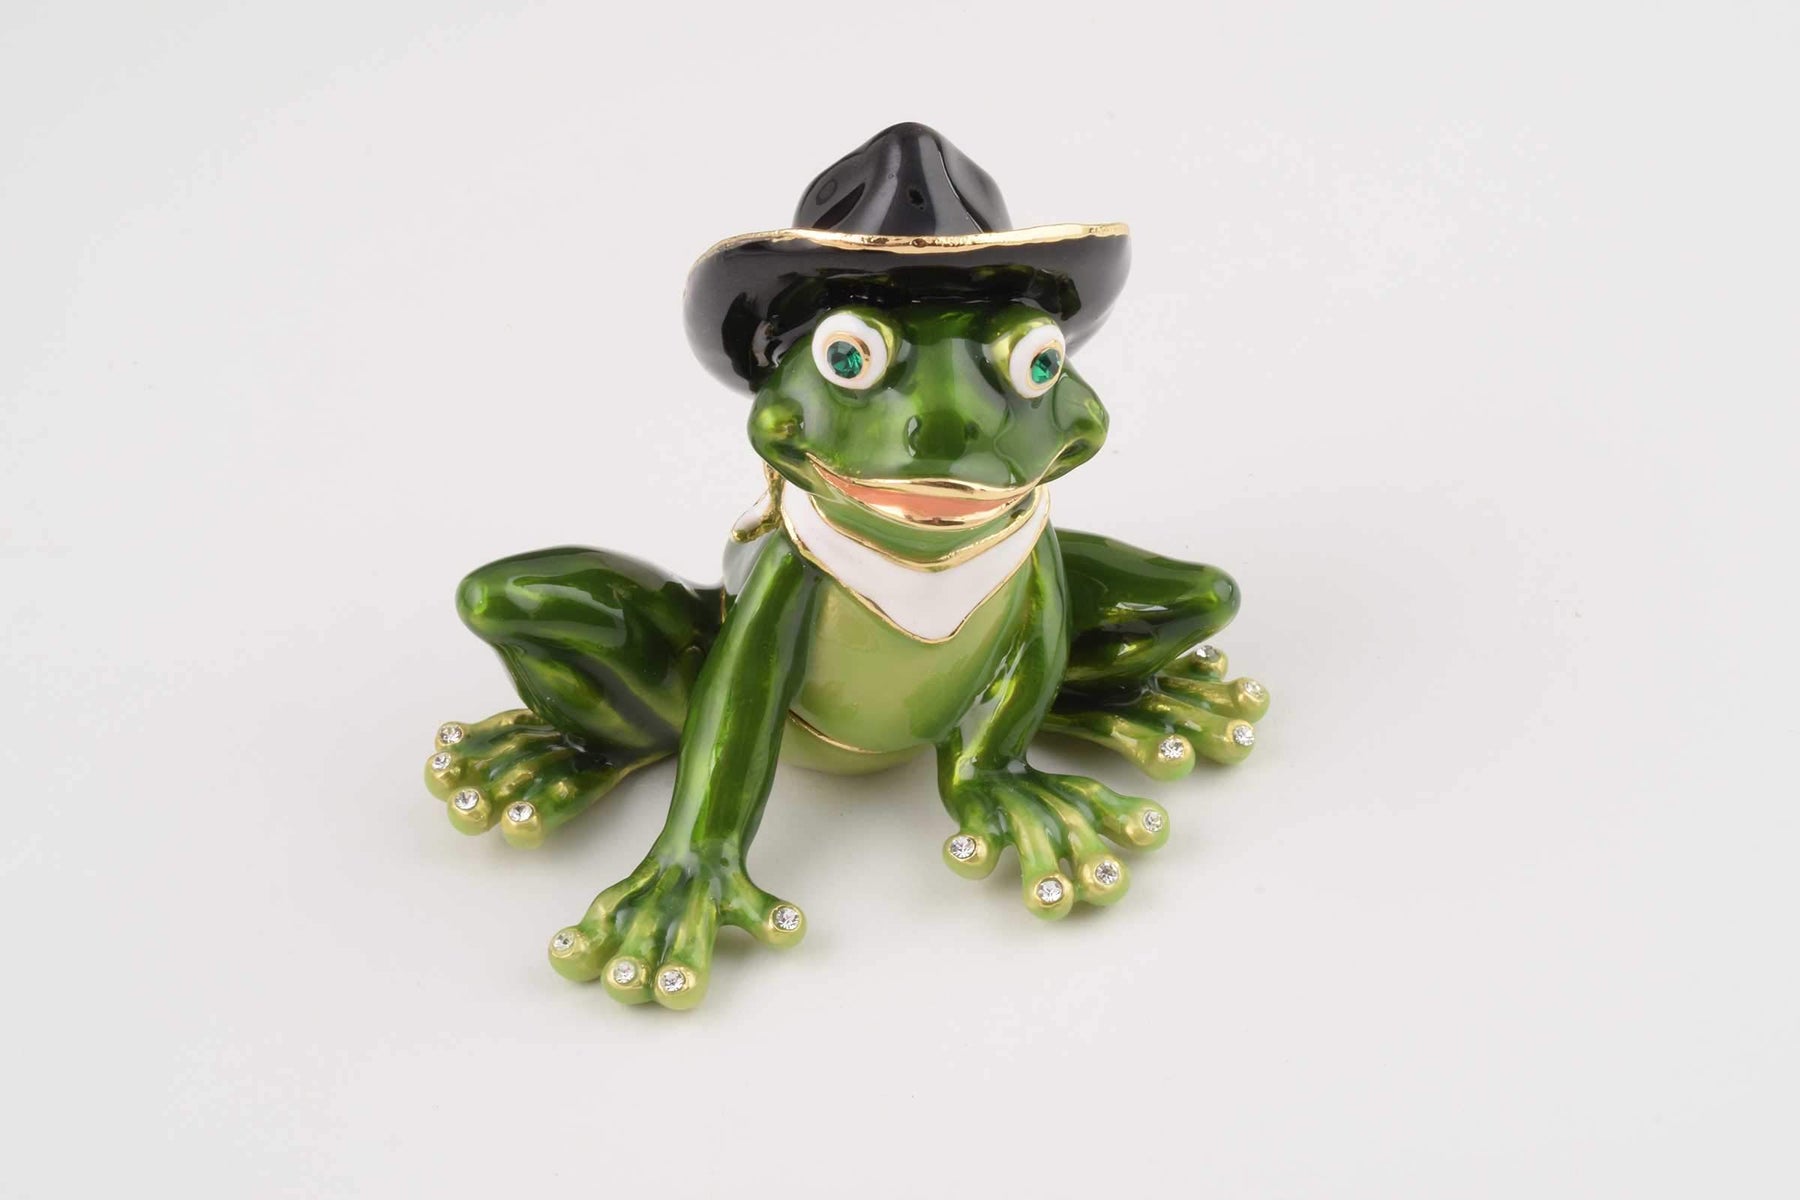 Keren Kopal Frog with a Hat  56.50